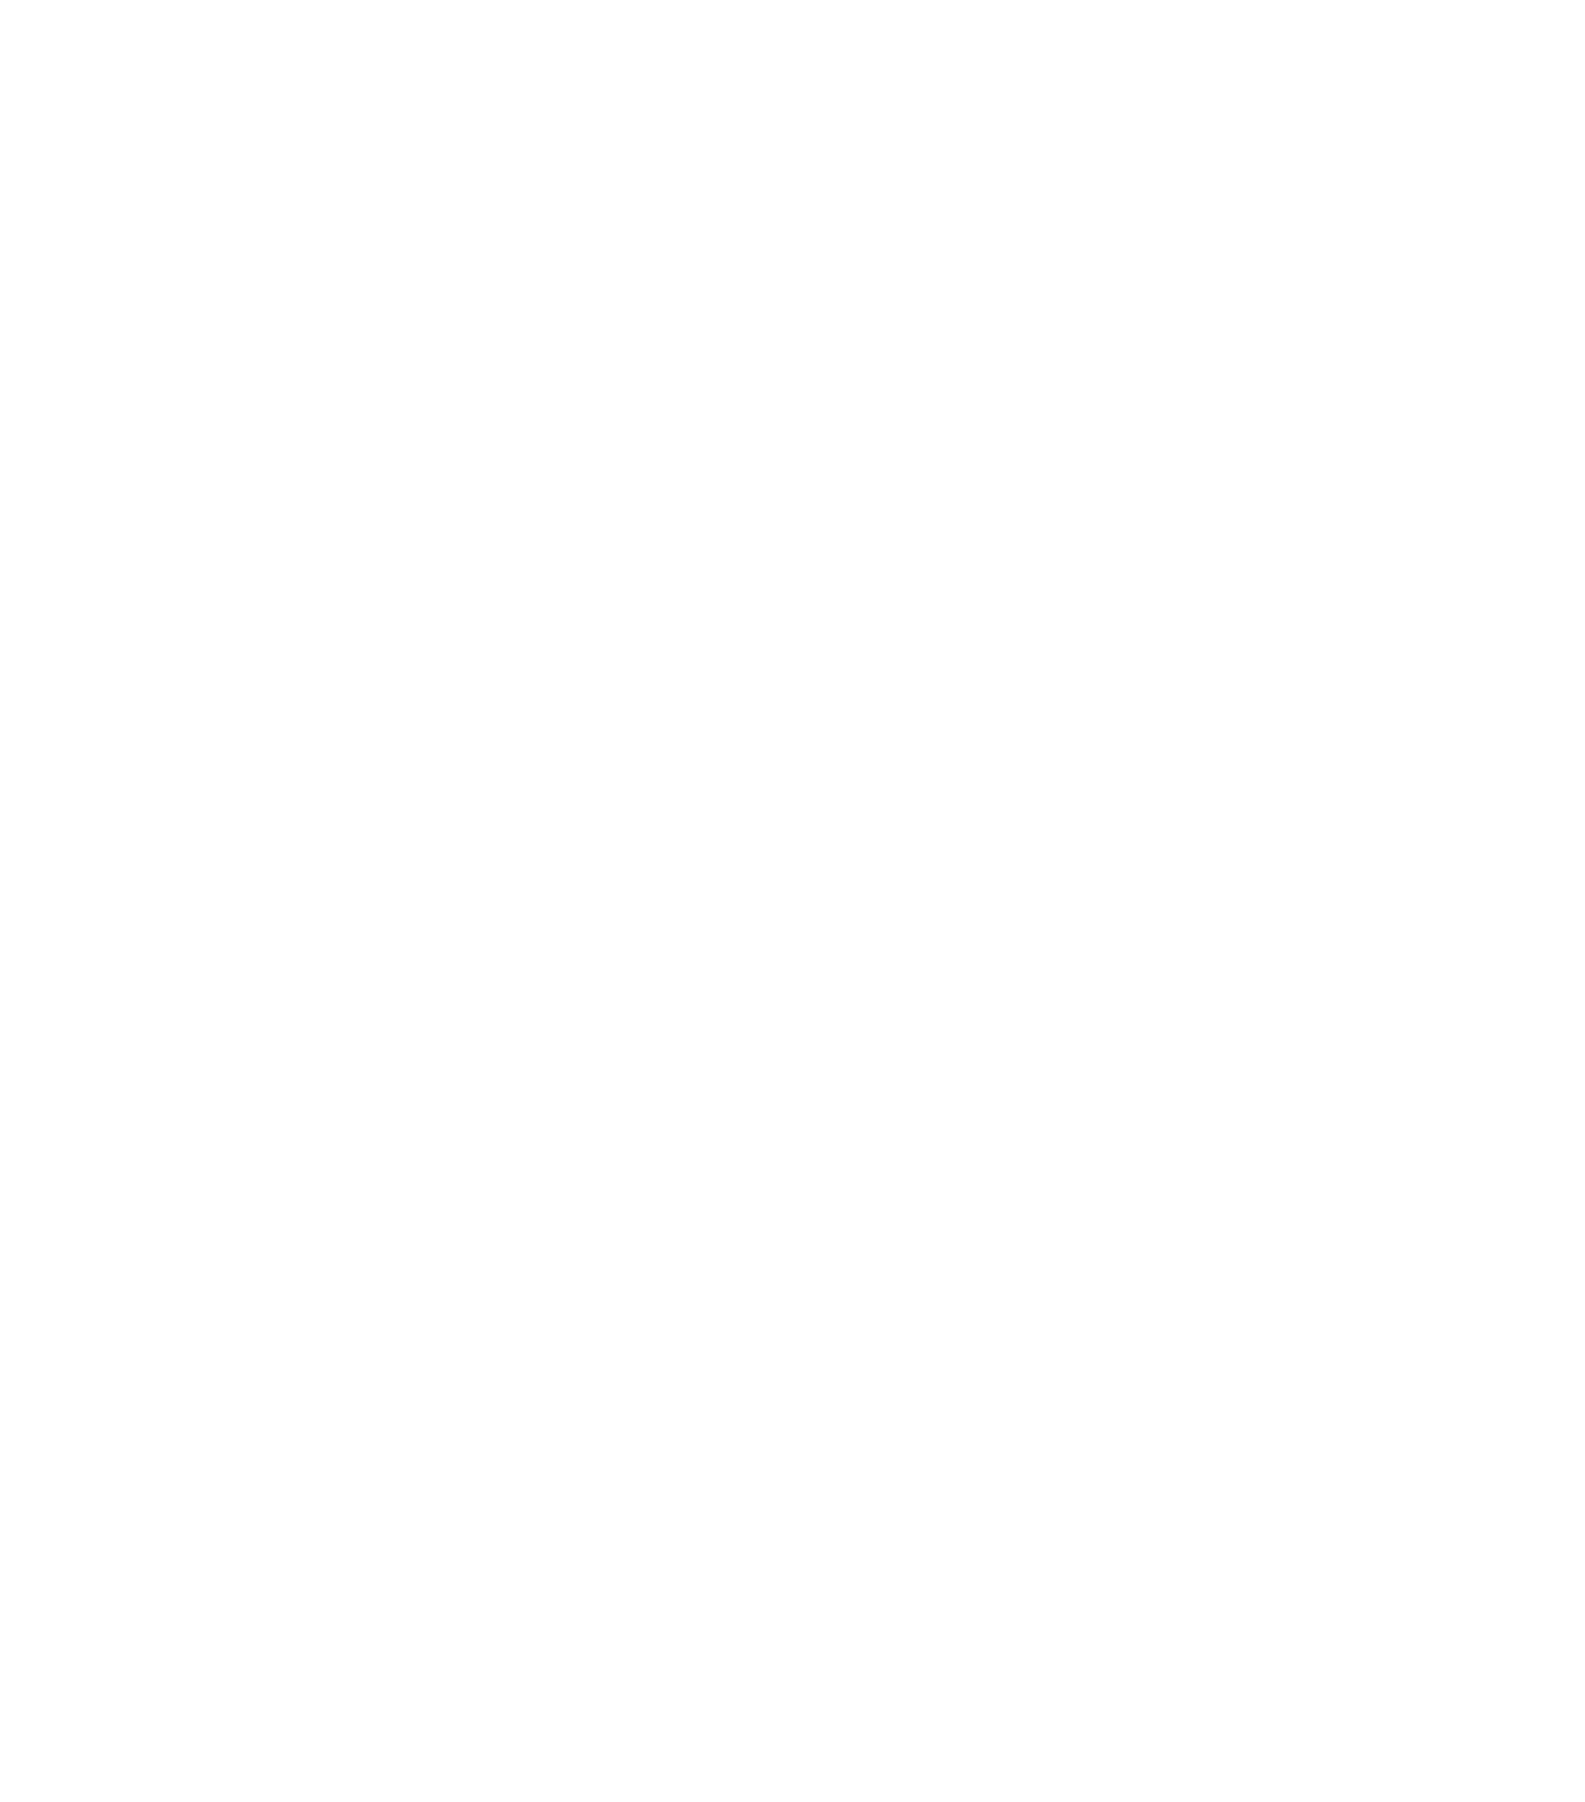 Markforged logo pour fonds sombres (PNG transparent)